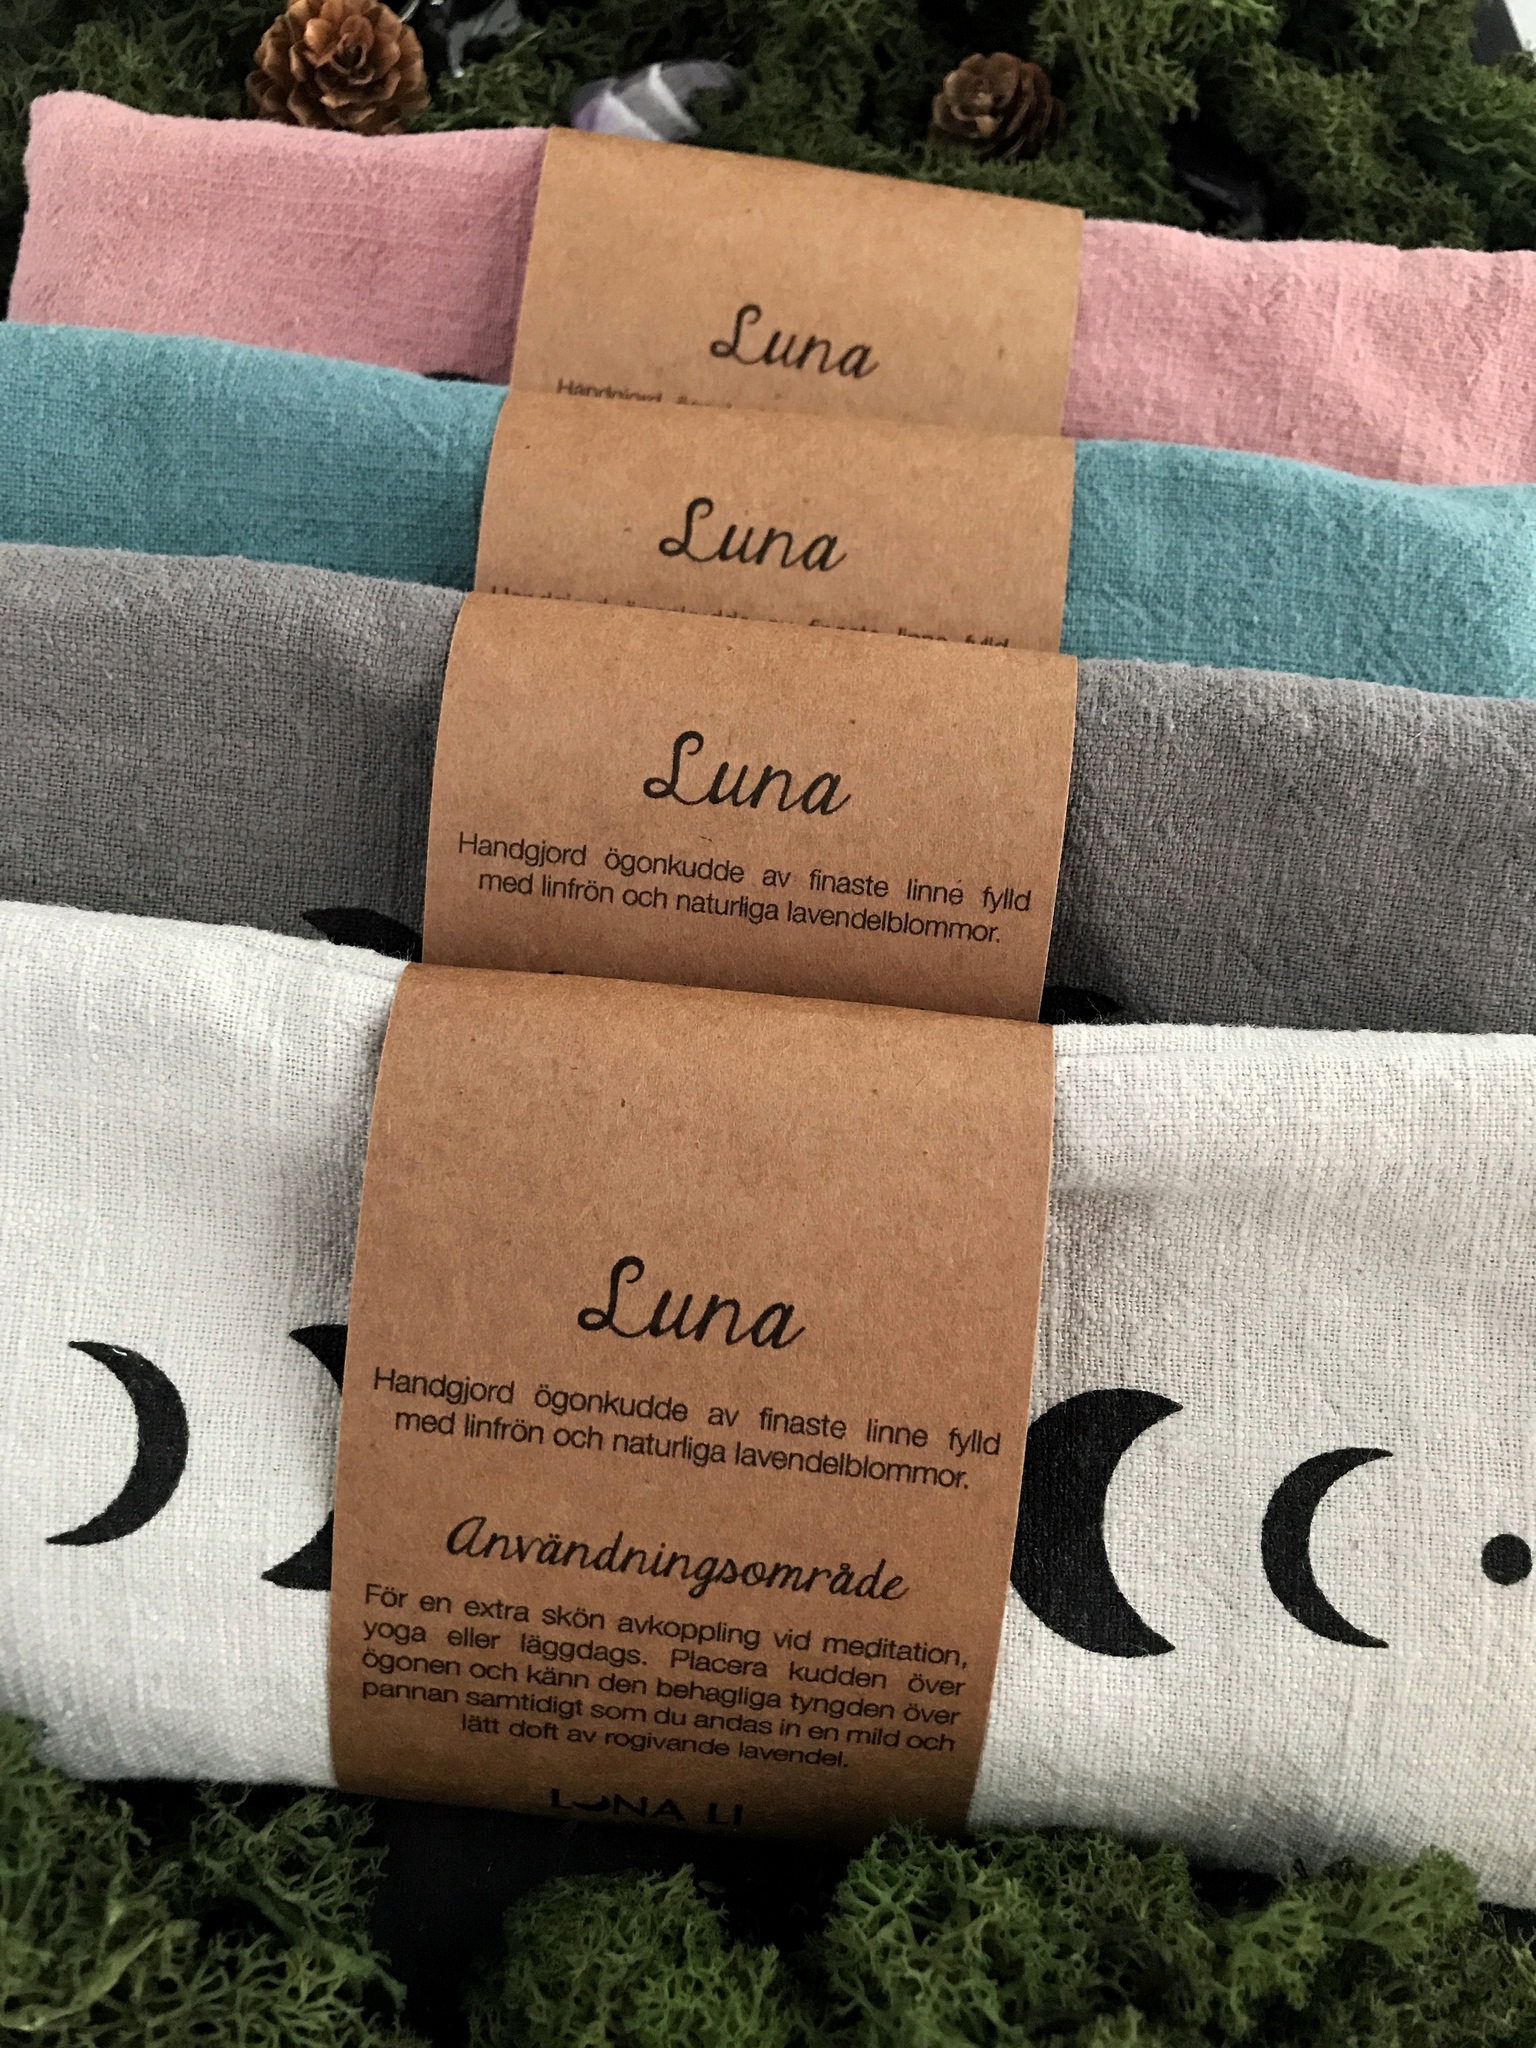 NYHET! Luna ögonkudde med lavendel, mossgrön